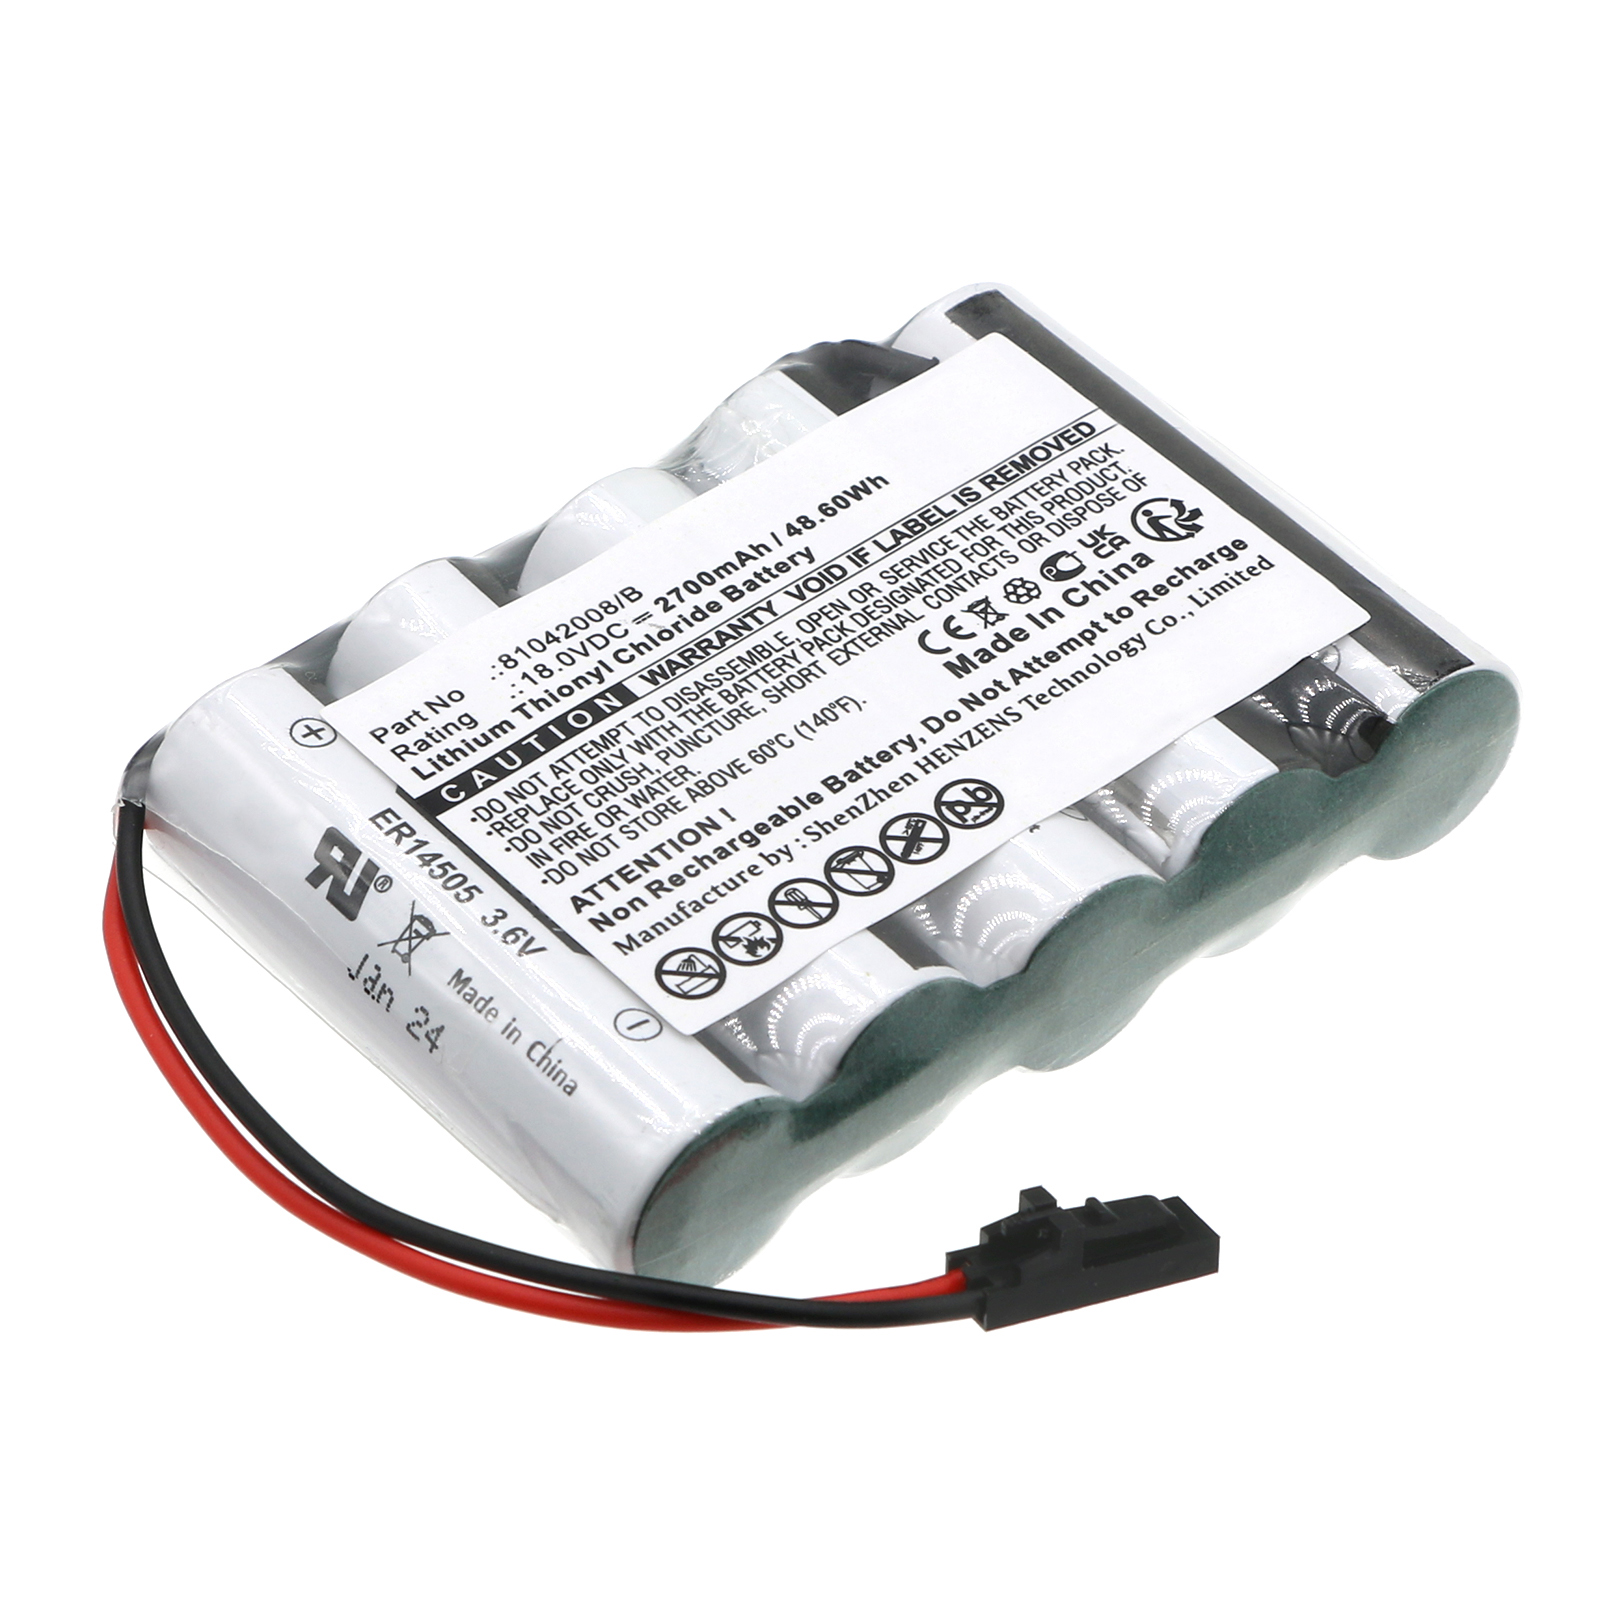 Synergy Digital Equipment Battery, Compatible with Exogen TL-5275 Equipment Battery (Li-SOCl2, 18V, 2700mAh)